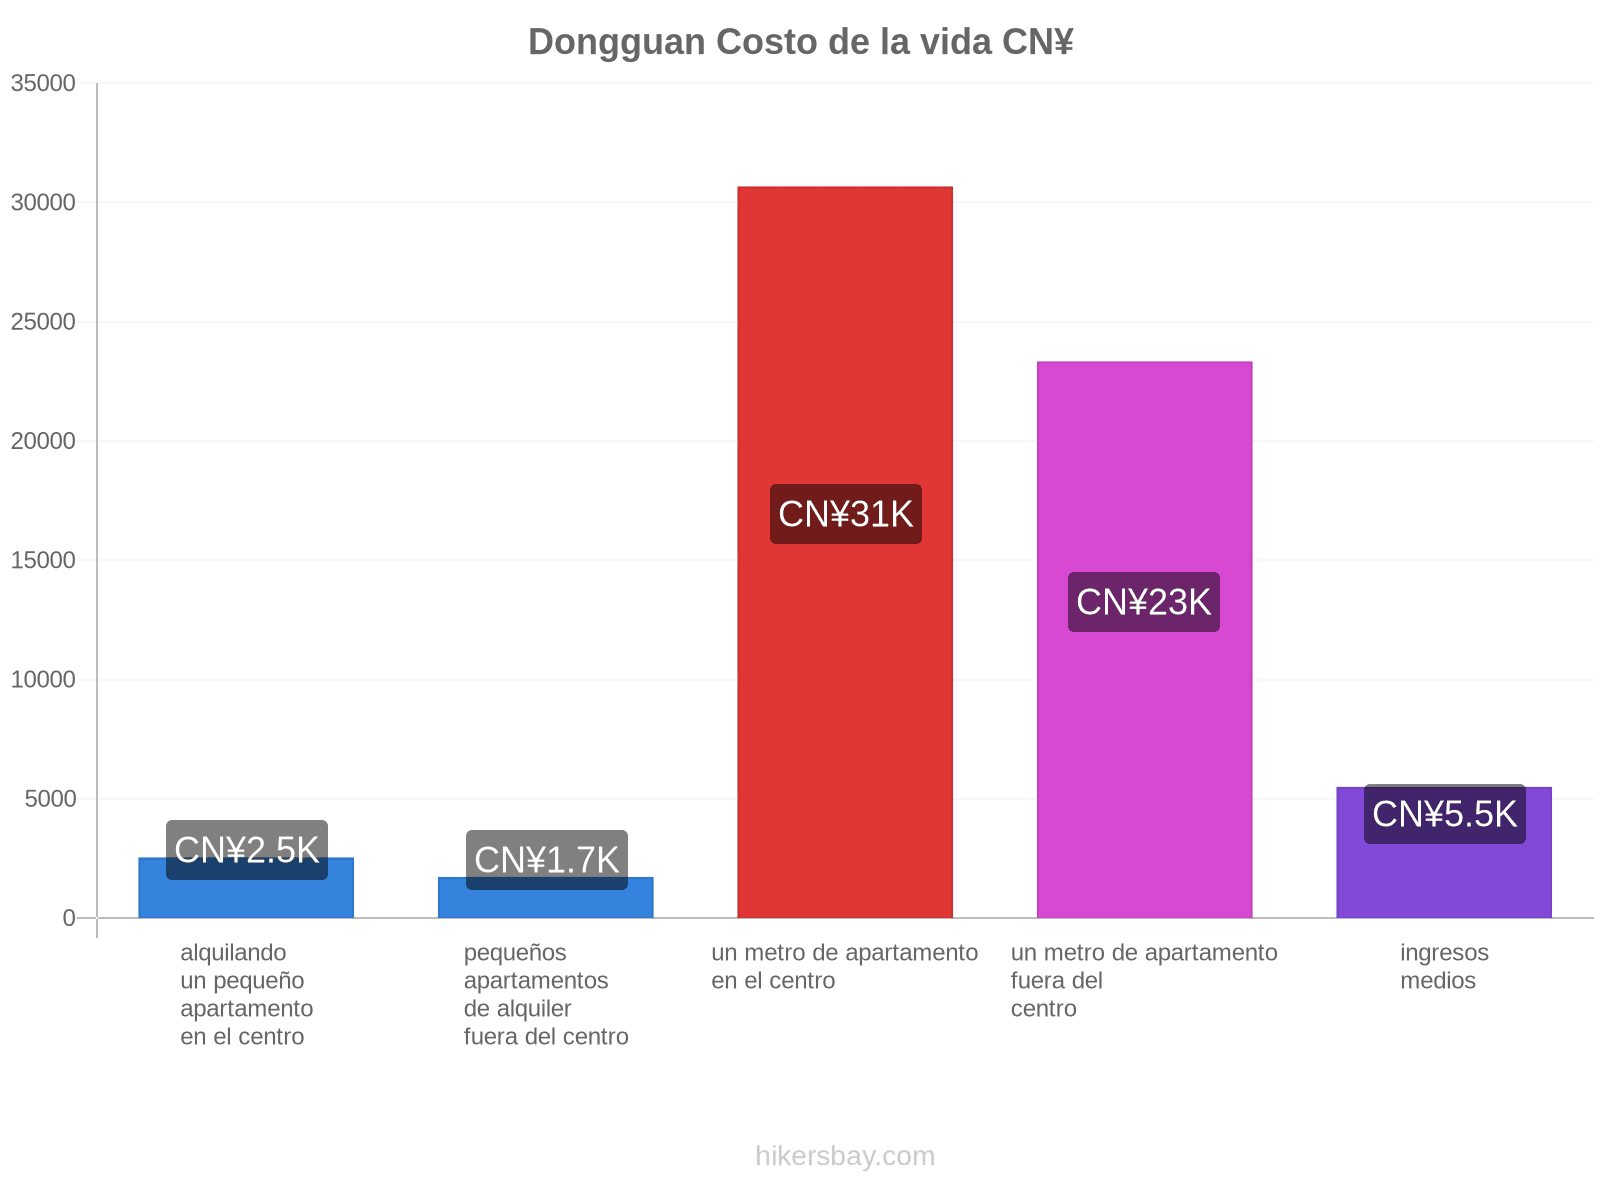 Dongguan costo de la vida hikersbay.com